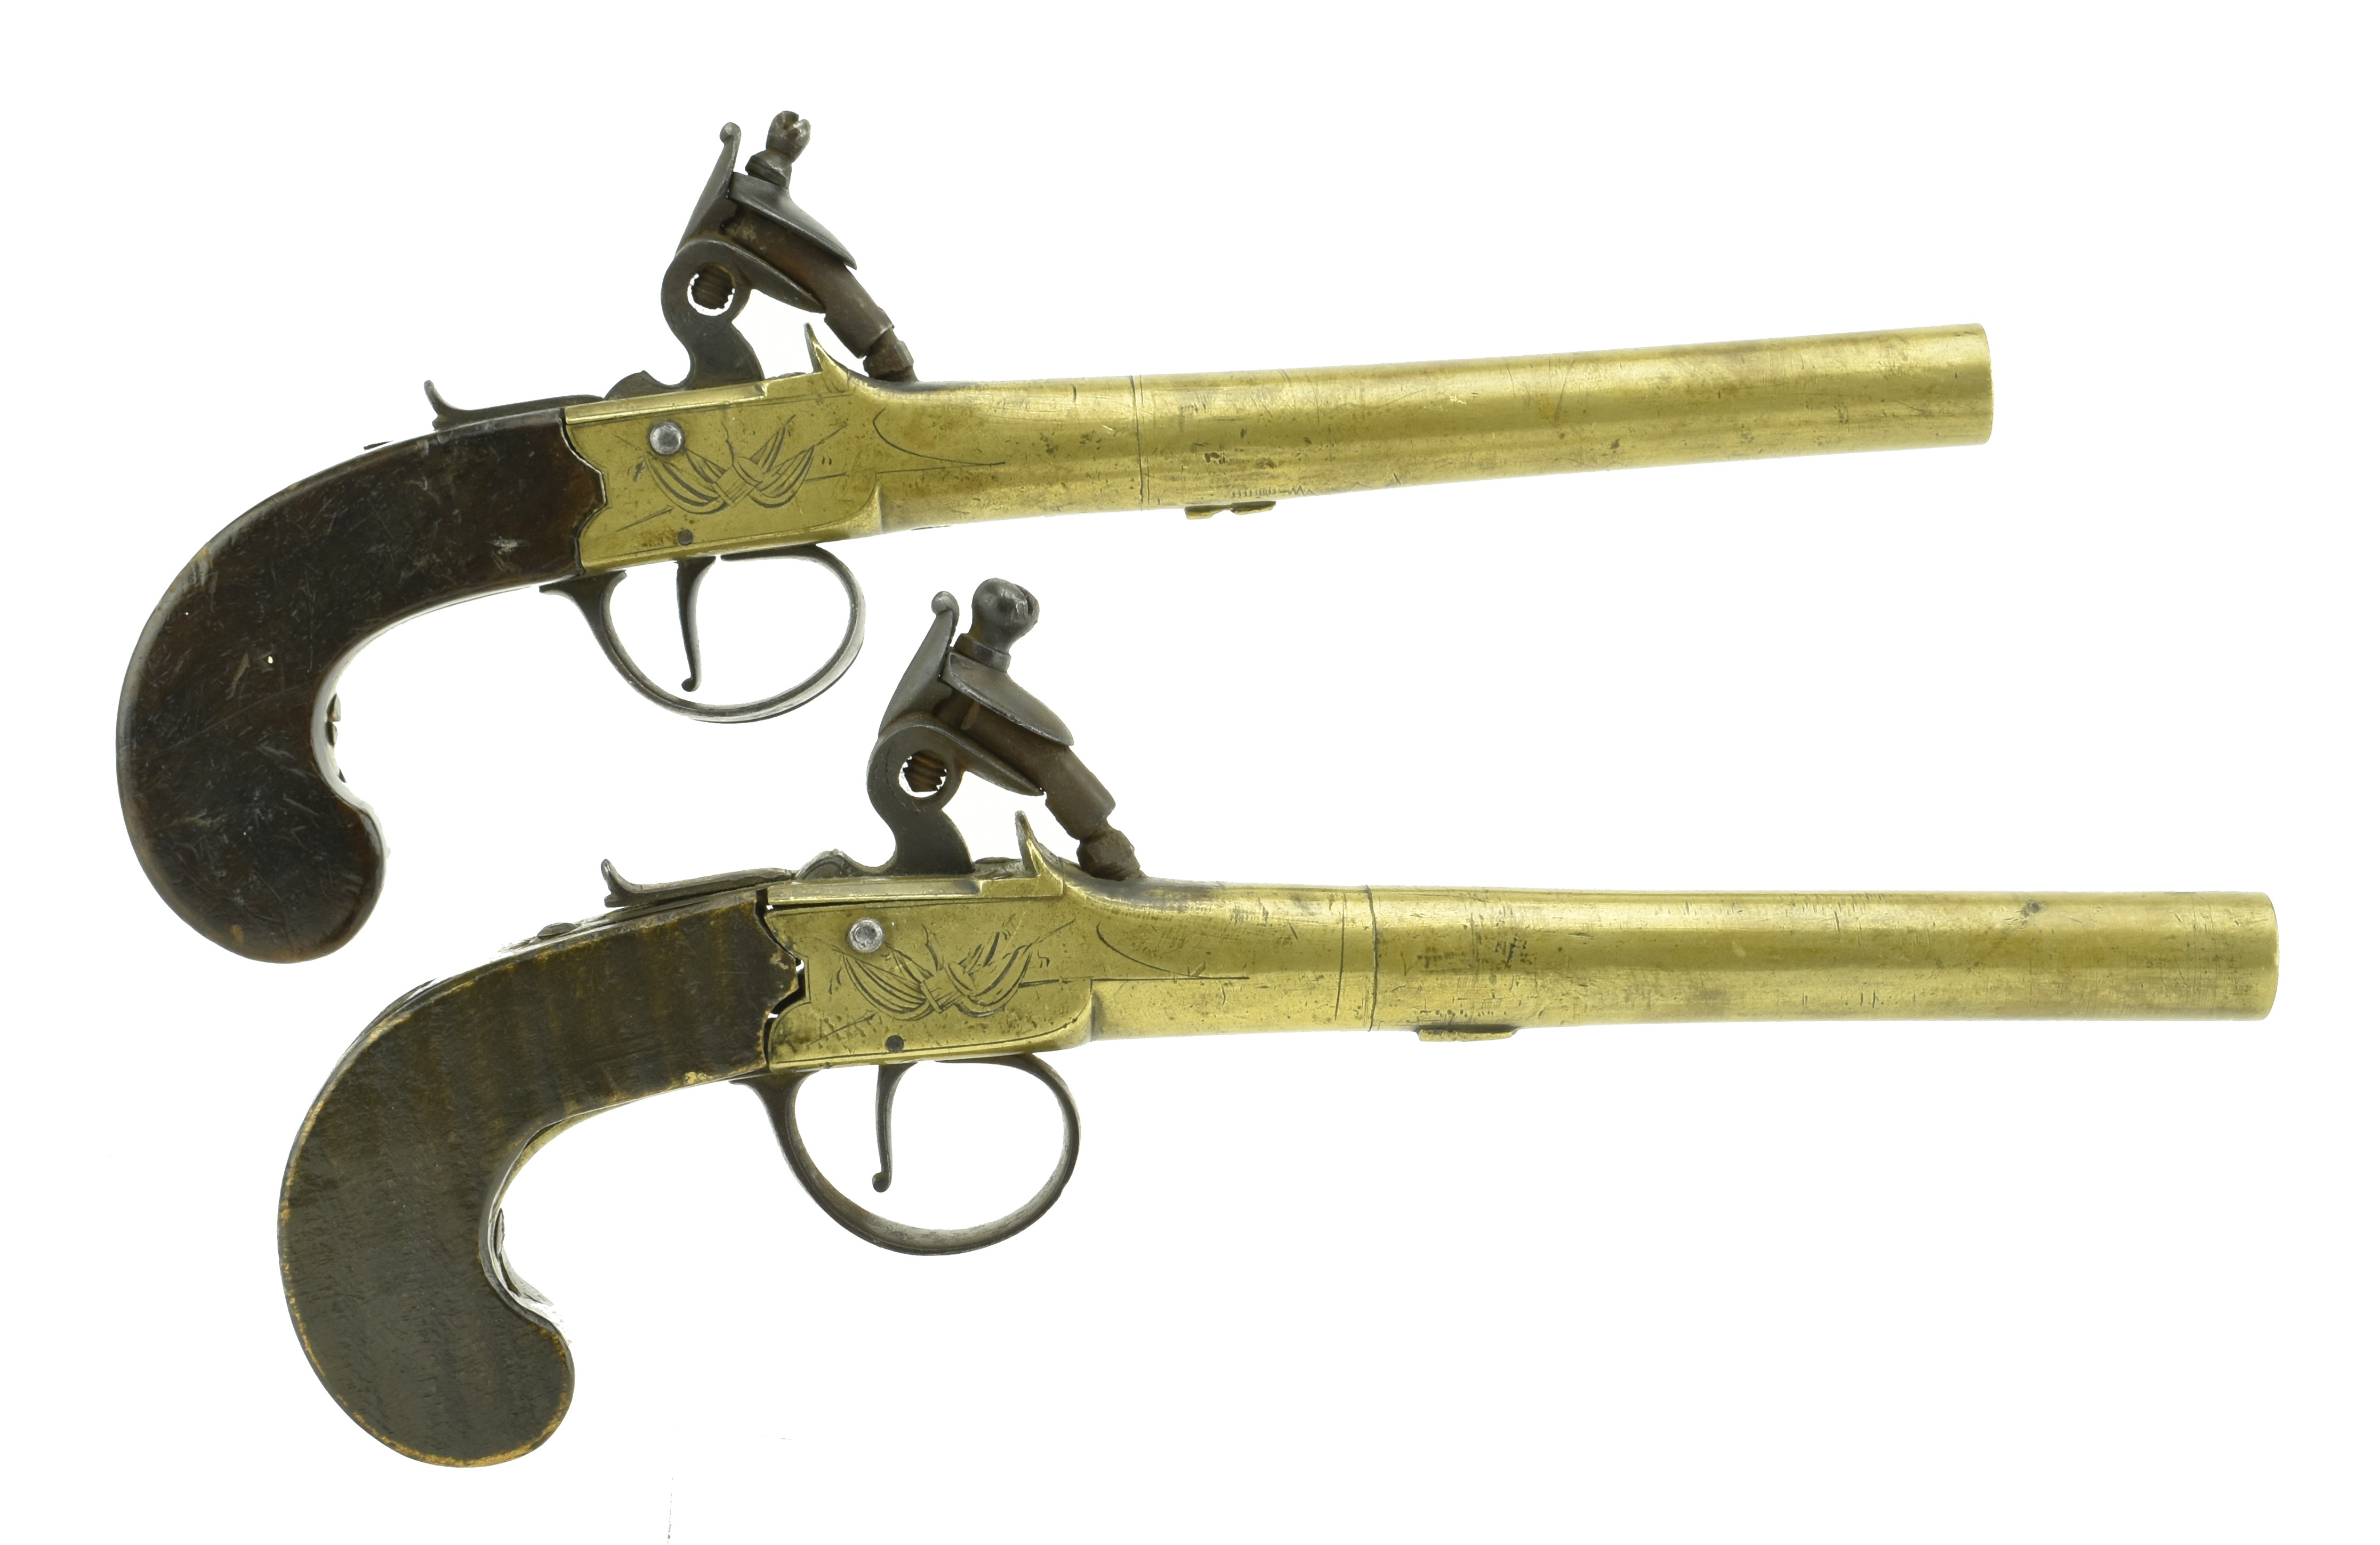 https://www.collectorsfirearms.com/45428/pair-of-british-brass-barrel-pistols-converted-from-flintlocks-ah5391.jpg